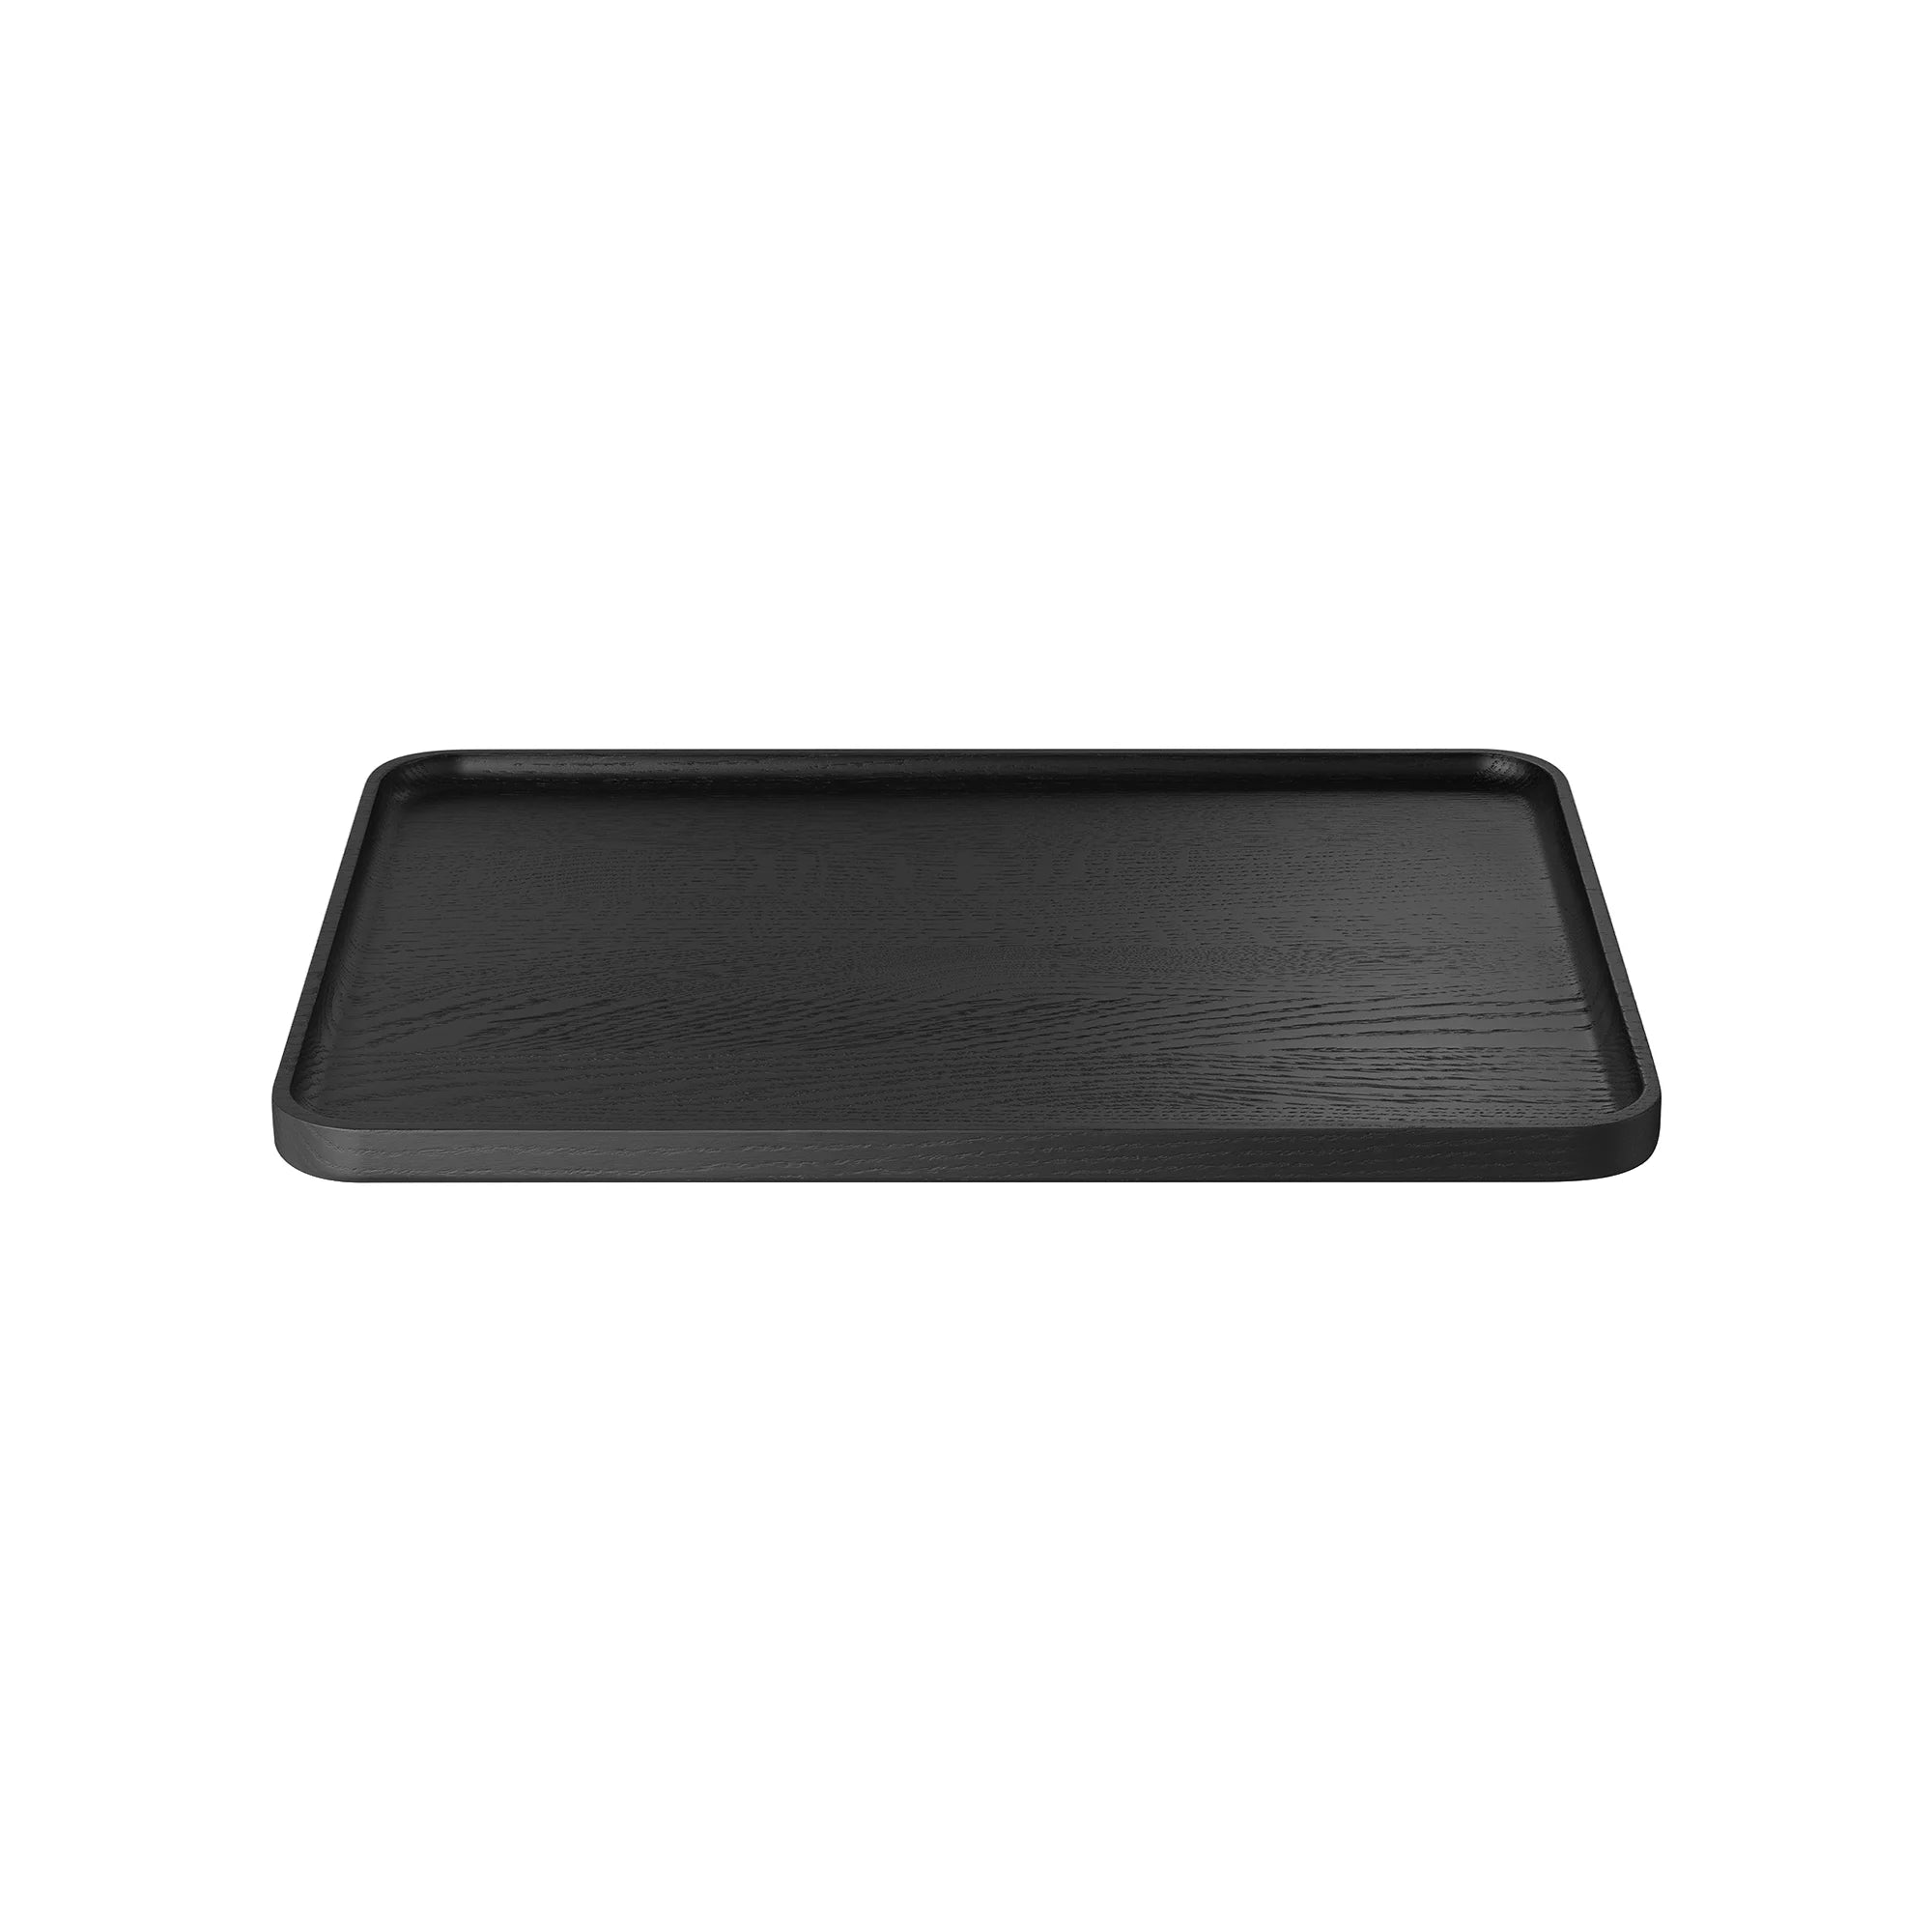 OKU Serving tray -OKU- Color Black Size Large